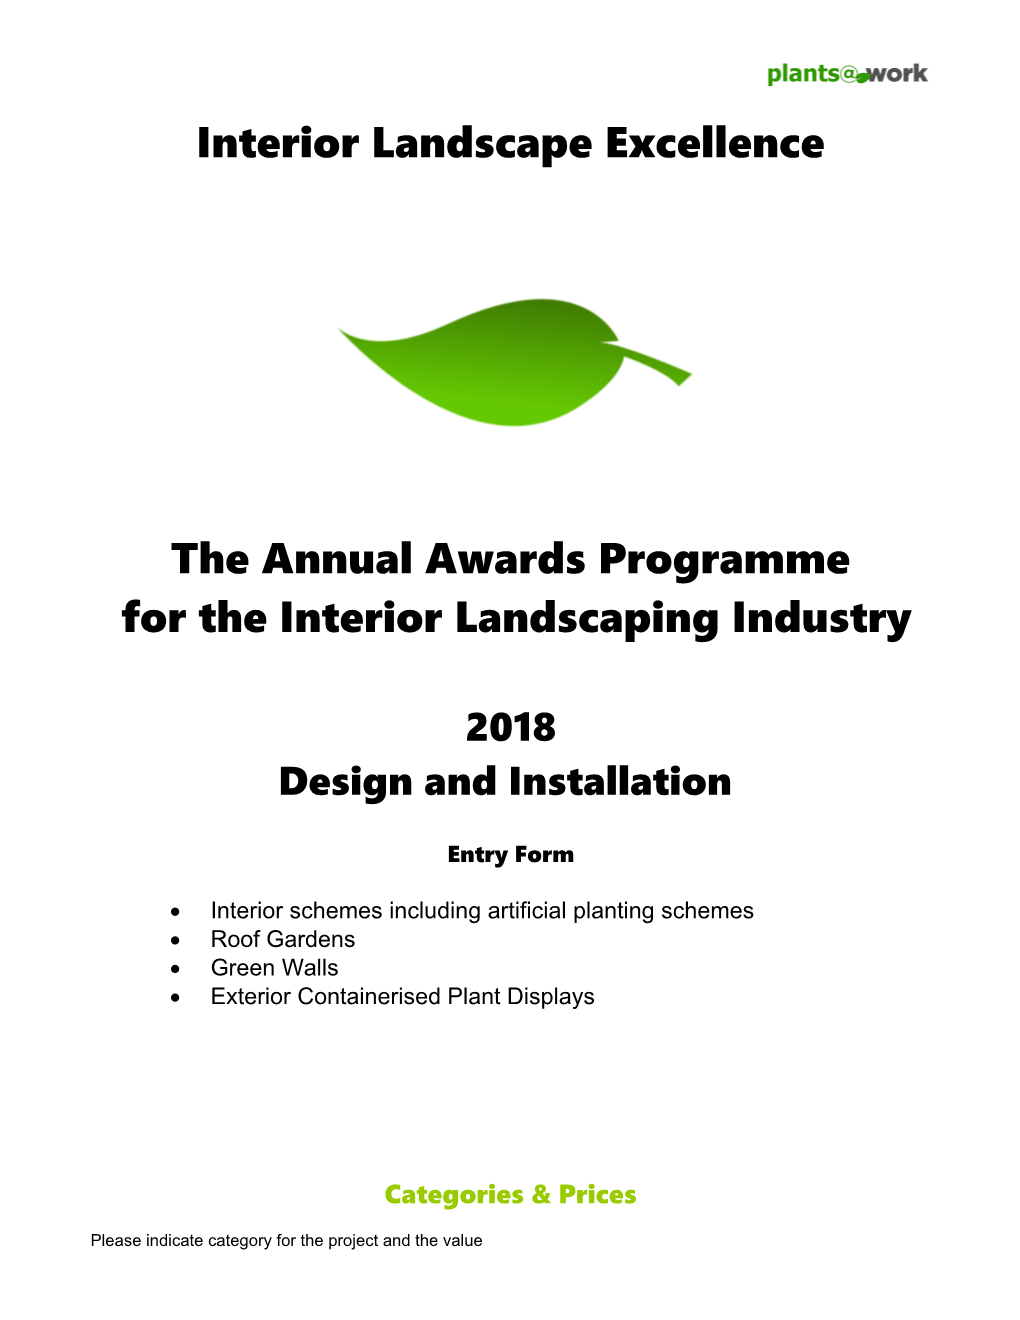 Awards for Interior